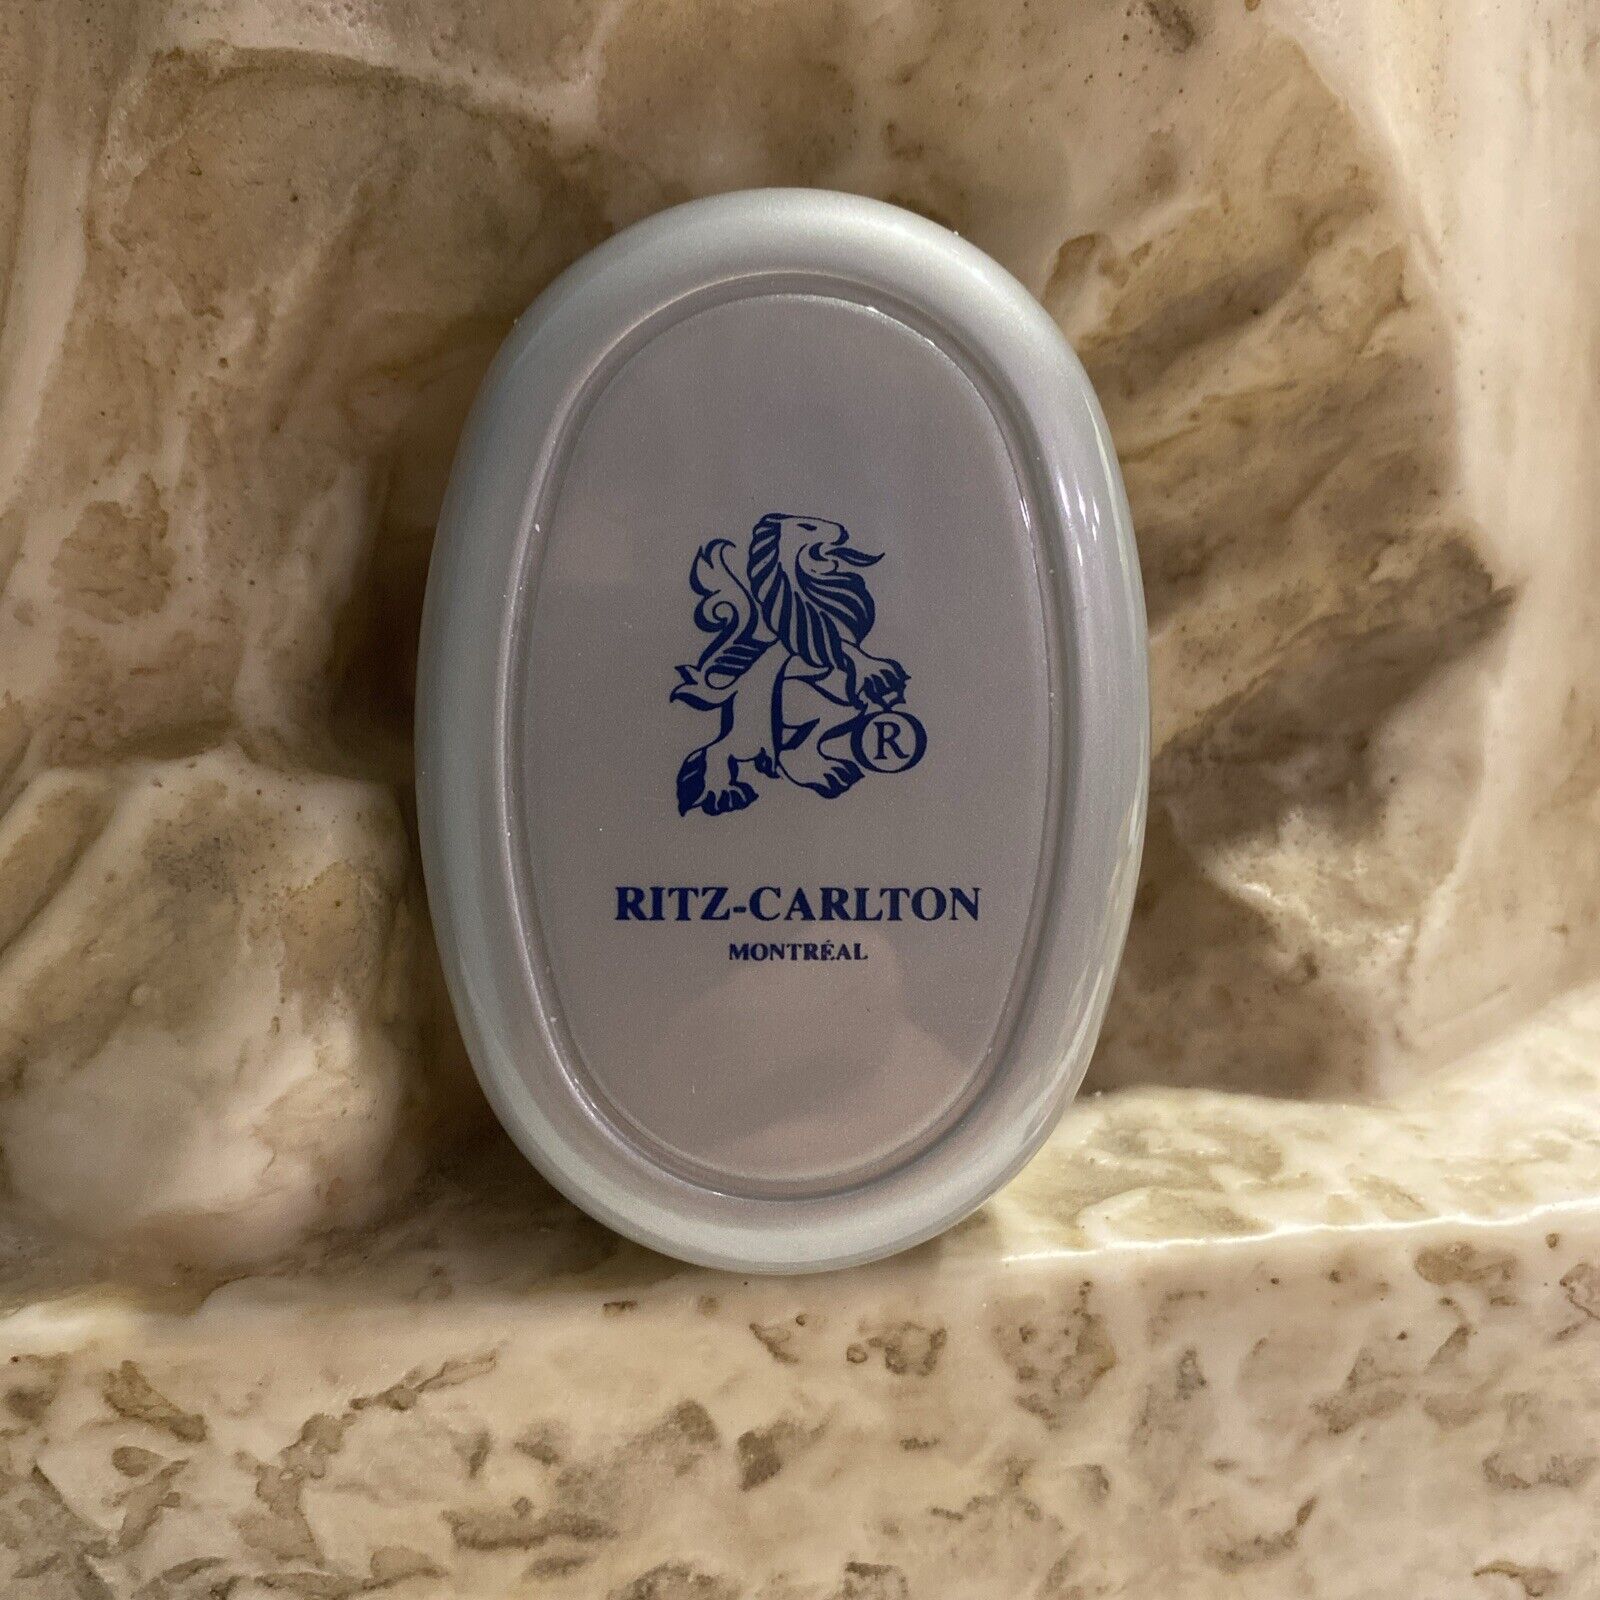 Vintage Ritz-Carlton Montreal Plastic Soap Holder (Sealed Soap Included)